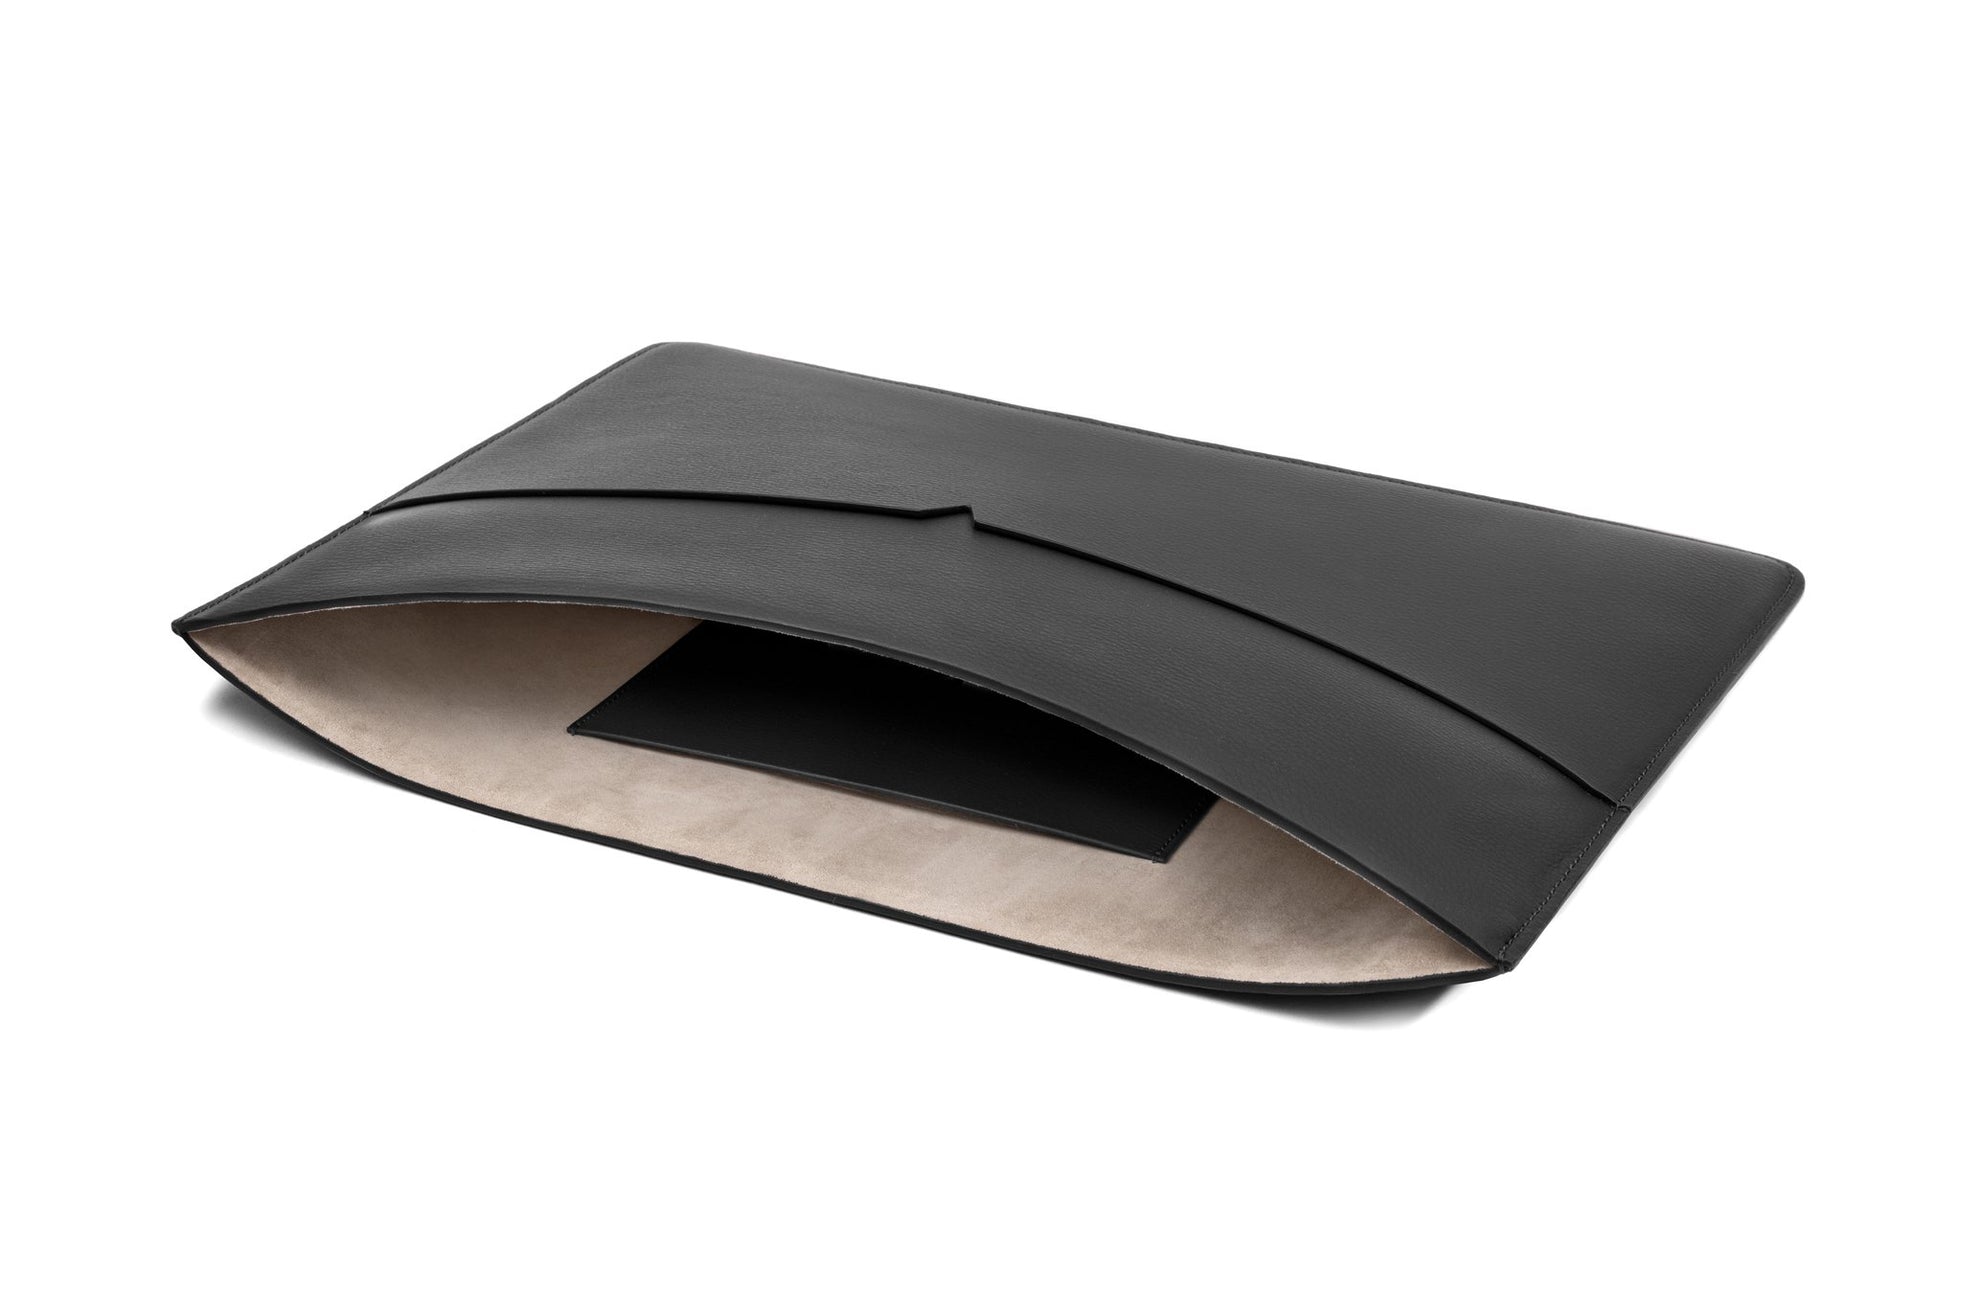 The MacBook Sleeve 13-inch - Sample Sale in Technik-Leather in Black image 5